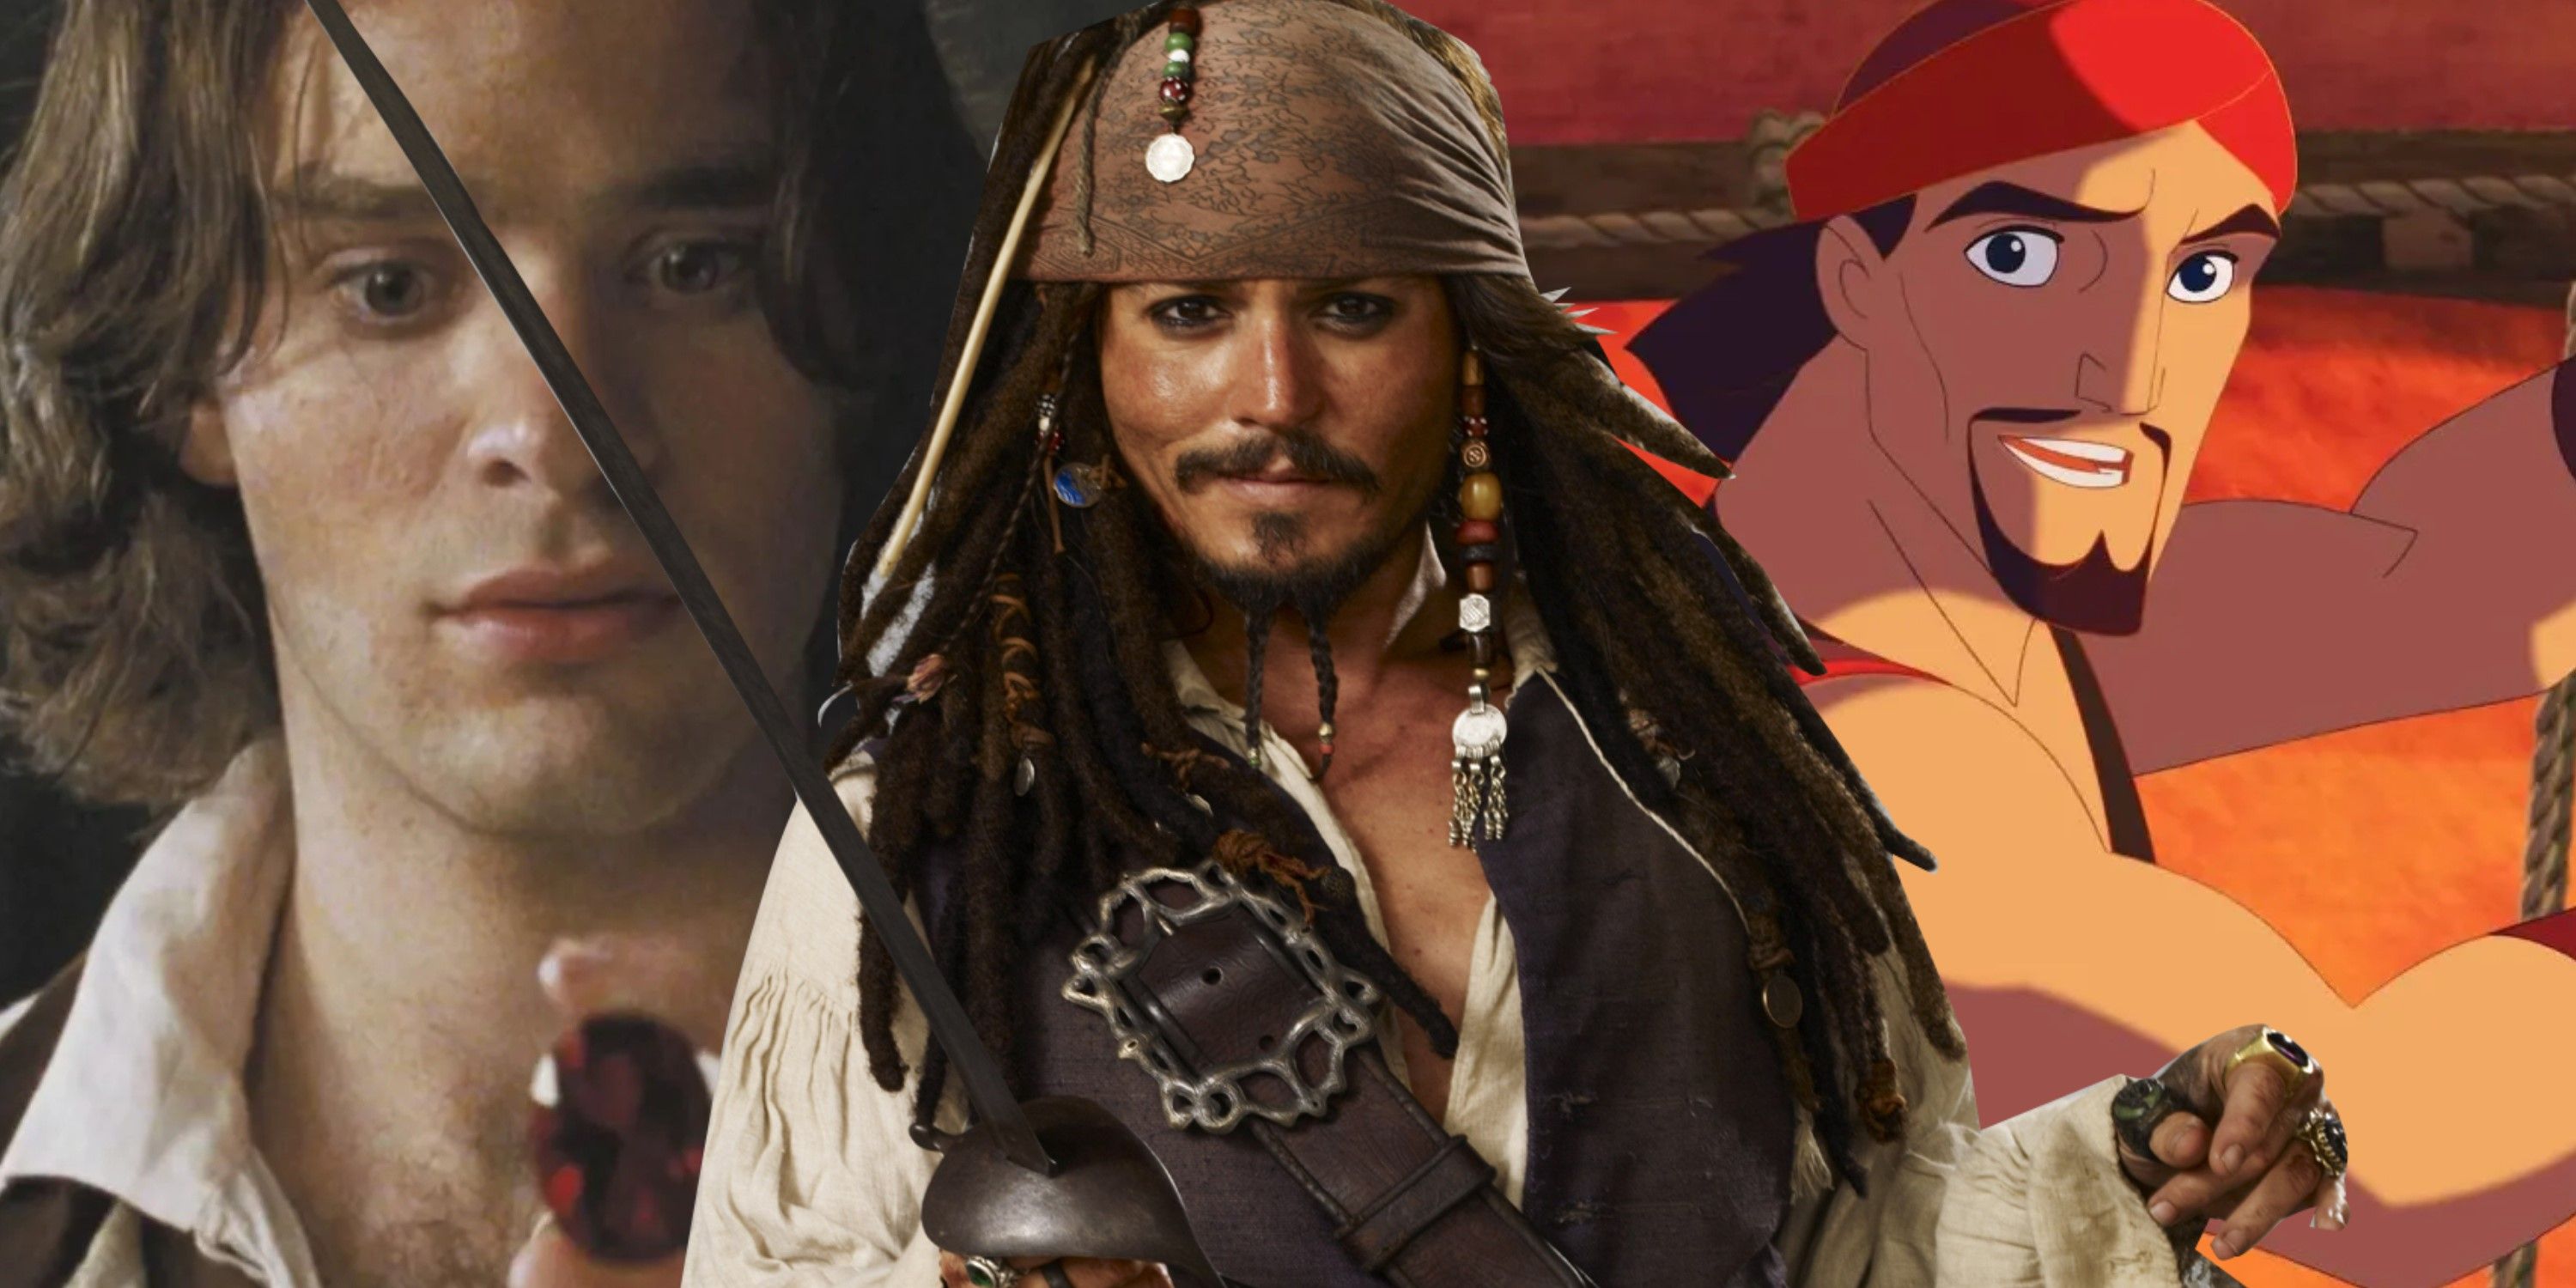 Composite image Tristan in Stardust, Captain Jack Sparrow, Sinbad